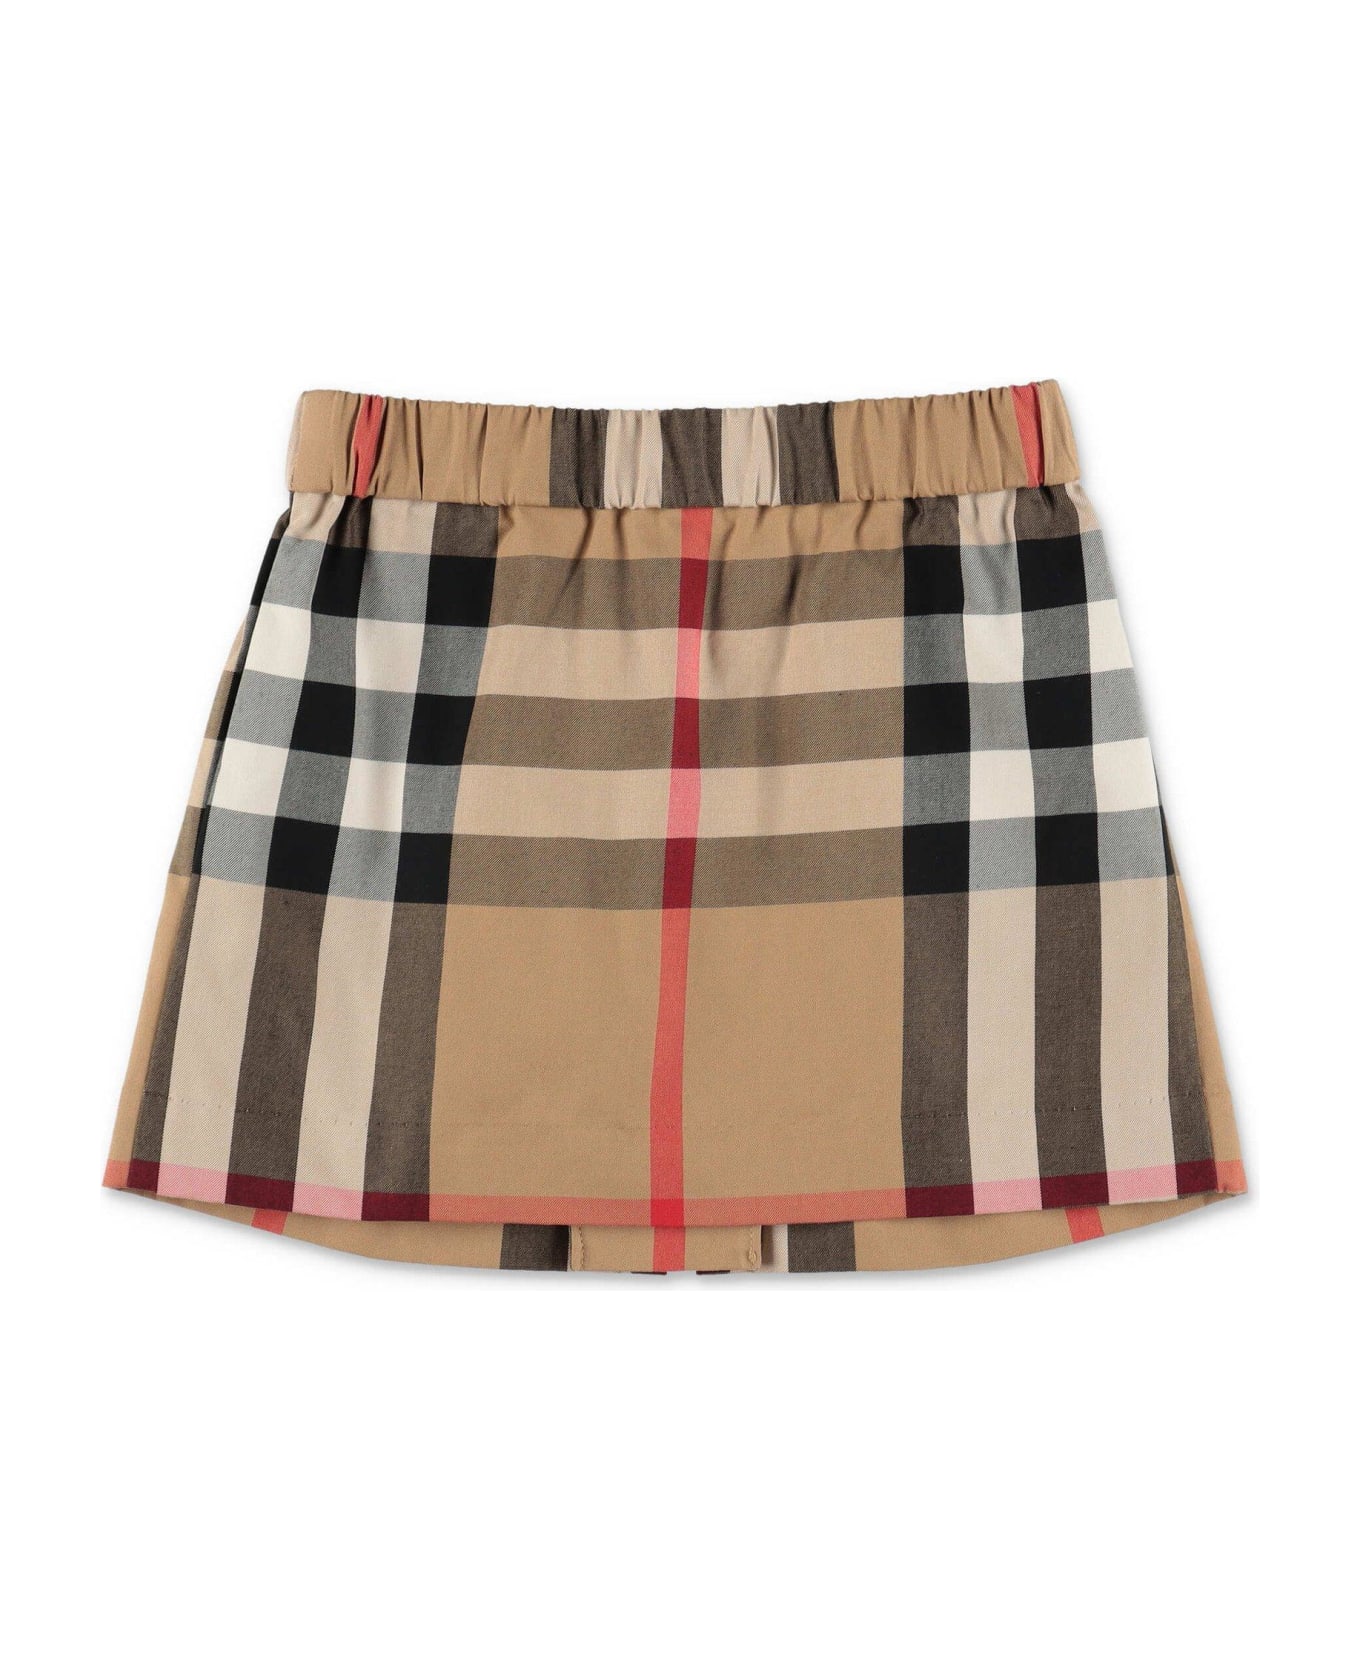 Burberry Checked Elastic Waist Skirt